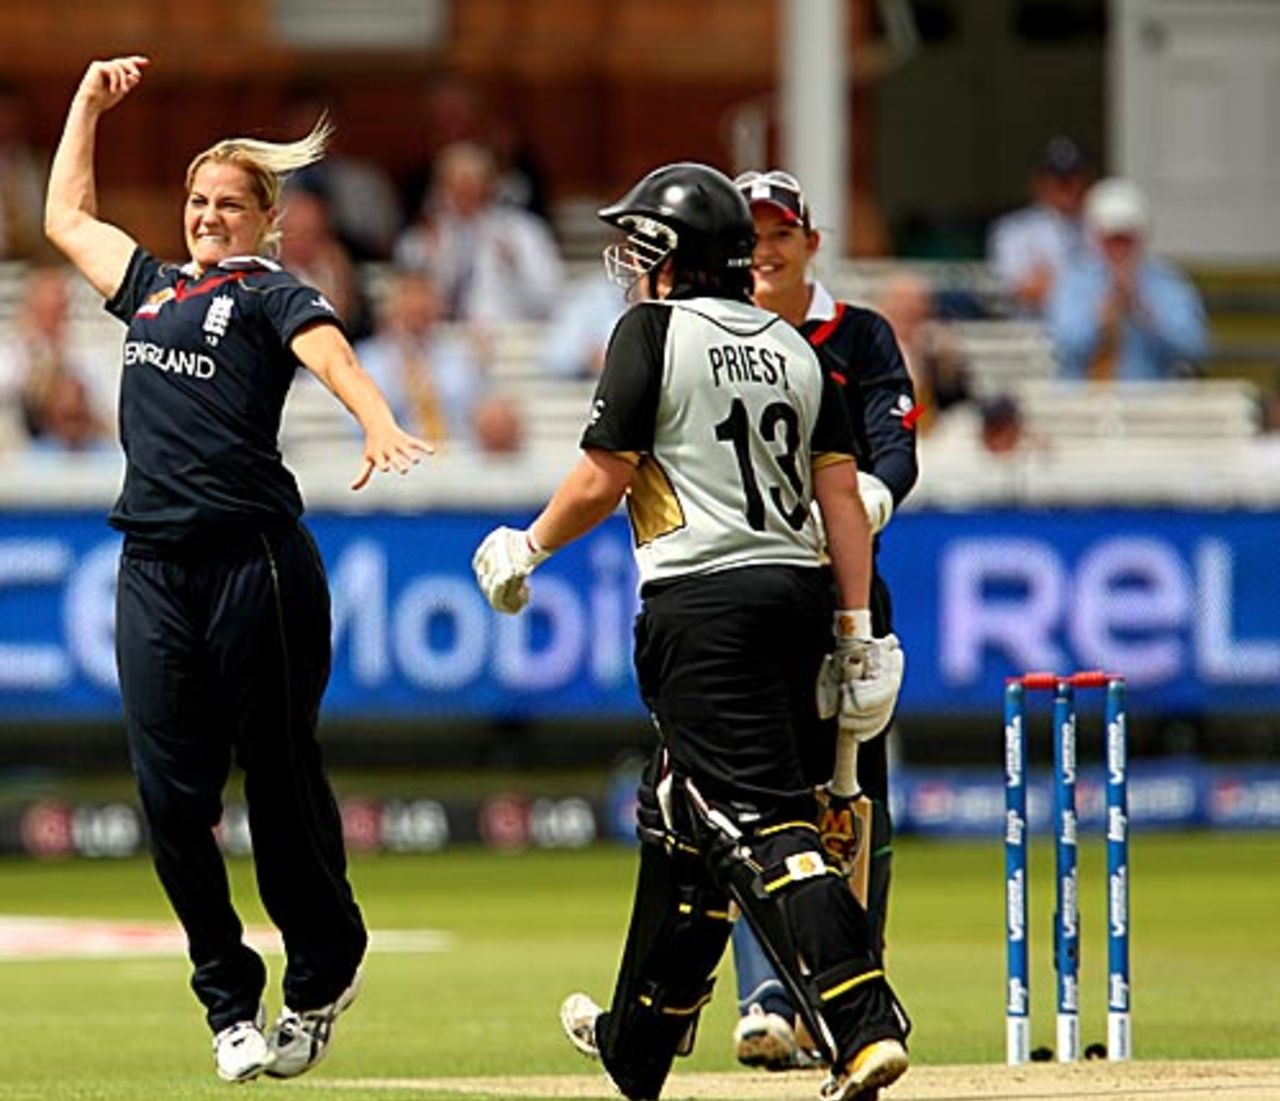 Rachel Priest was one of Katherine Brunt's three wickets, England v New Zealand, ICC Women's World Twenty20 final, Lord's, June 21, 2009